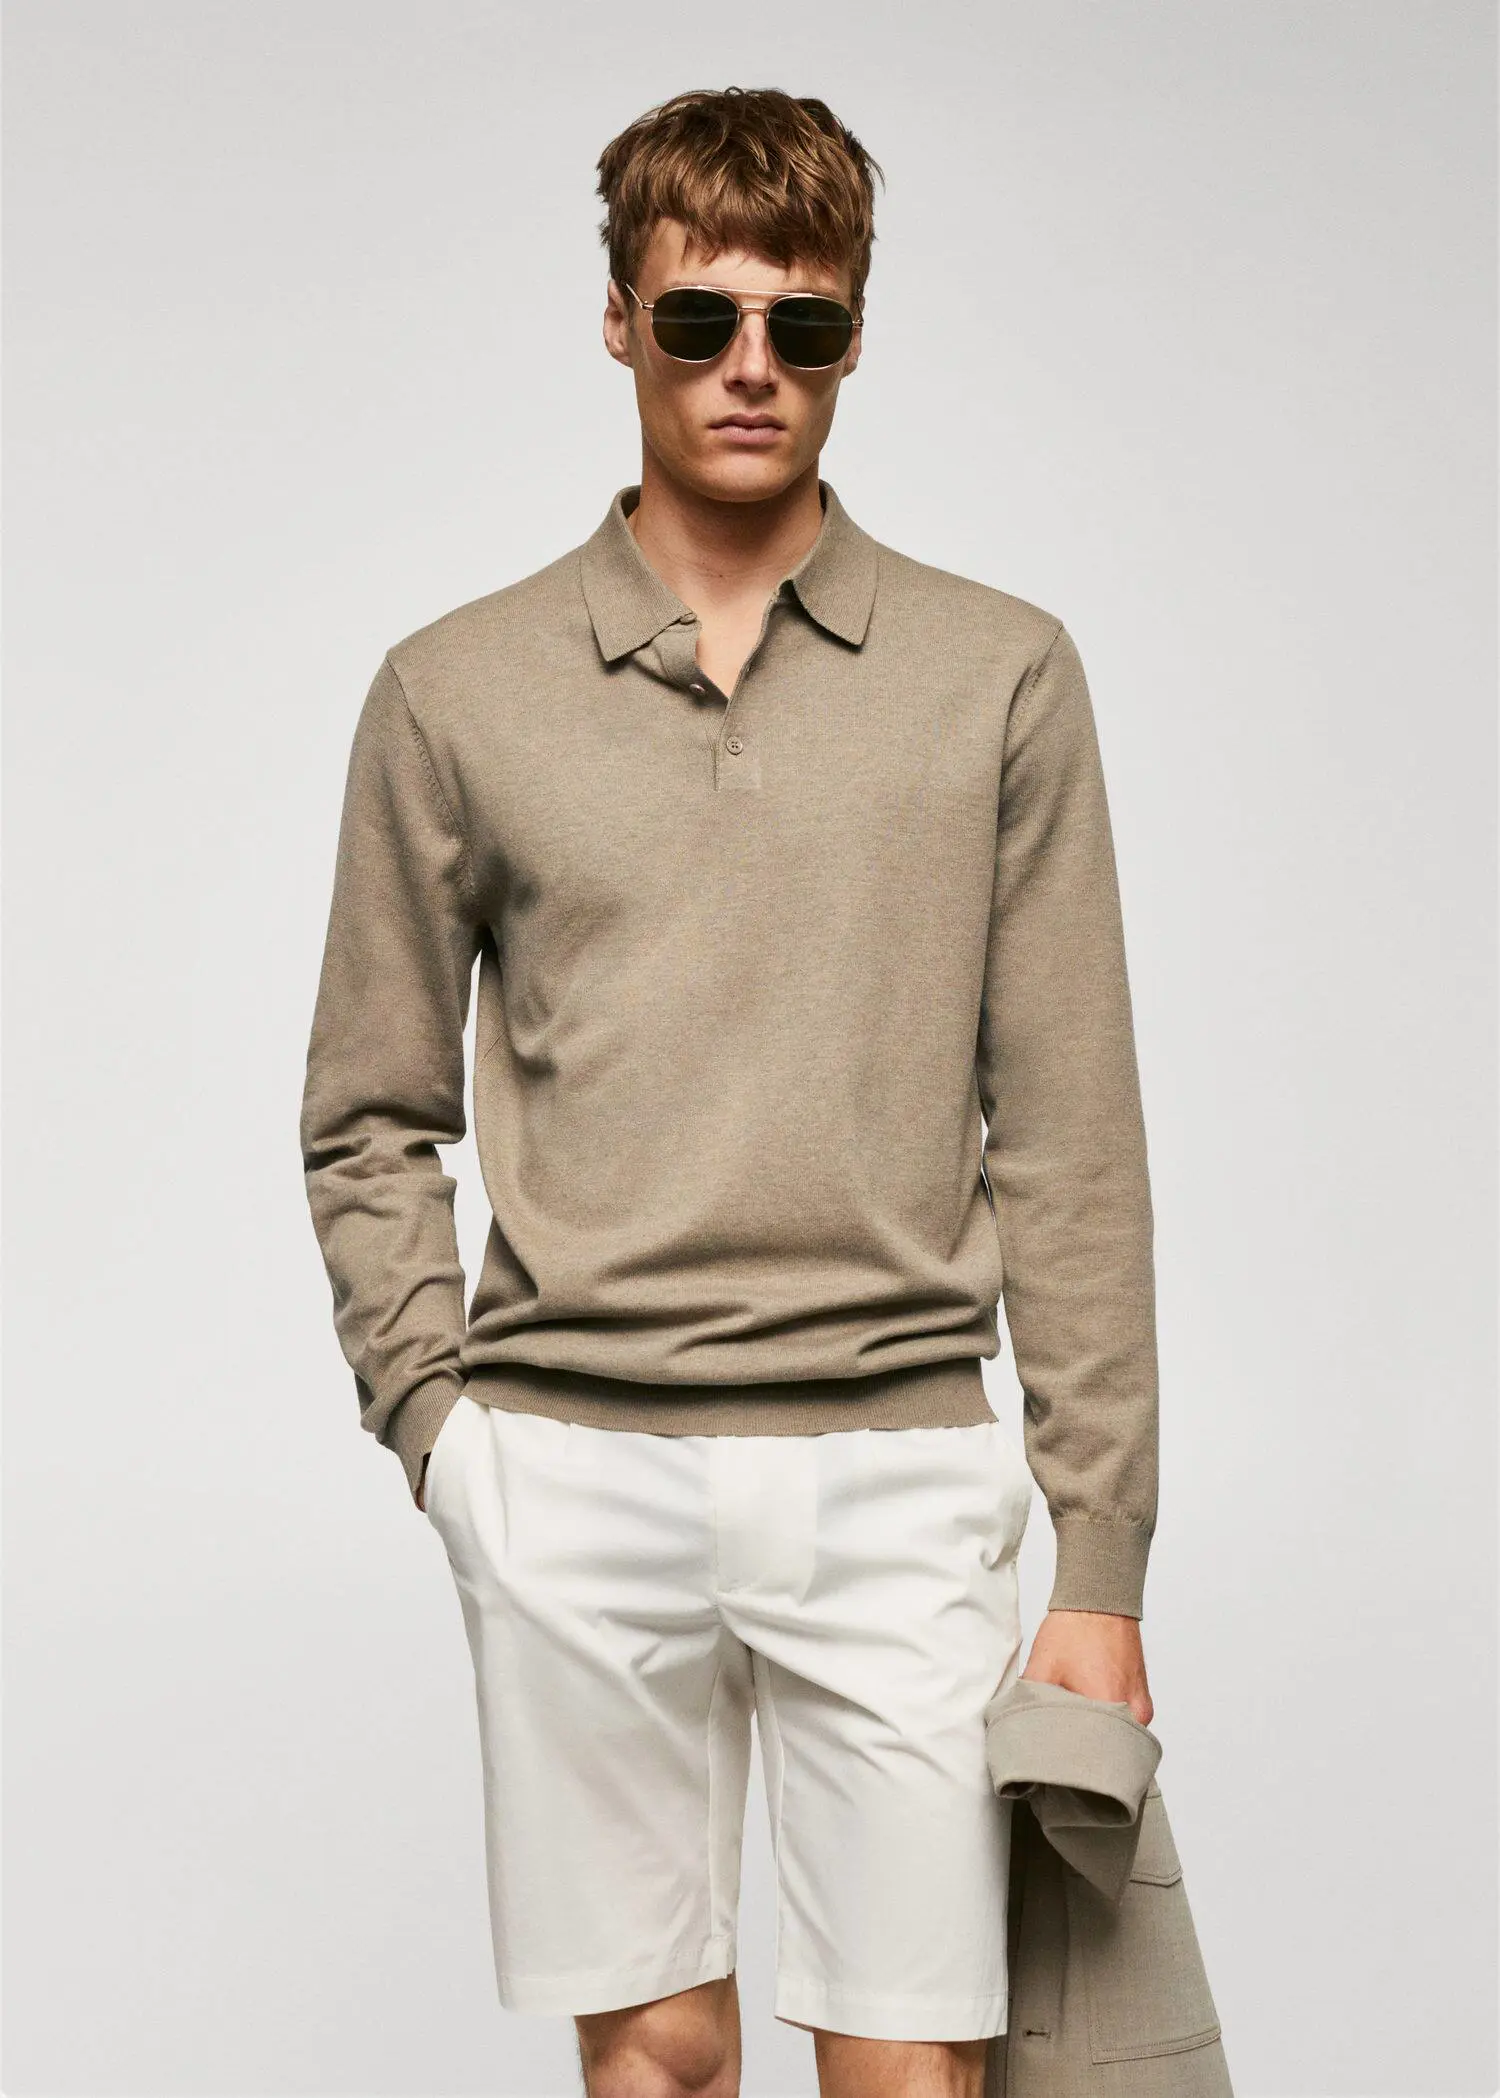 Mango Long-sleeved cotton jersey polo shirt. 1